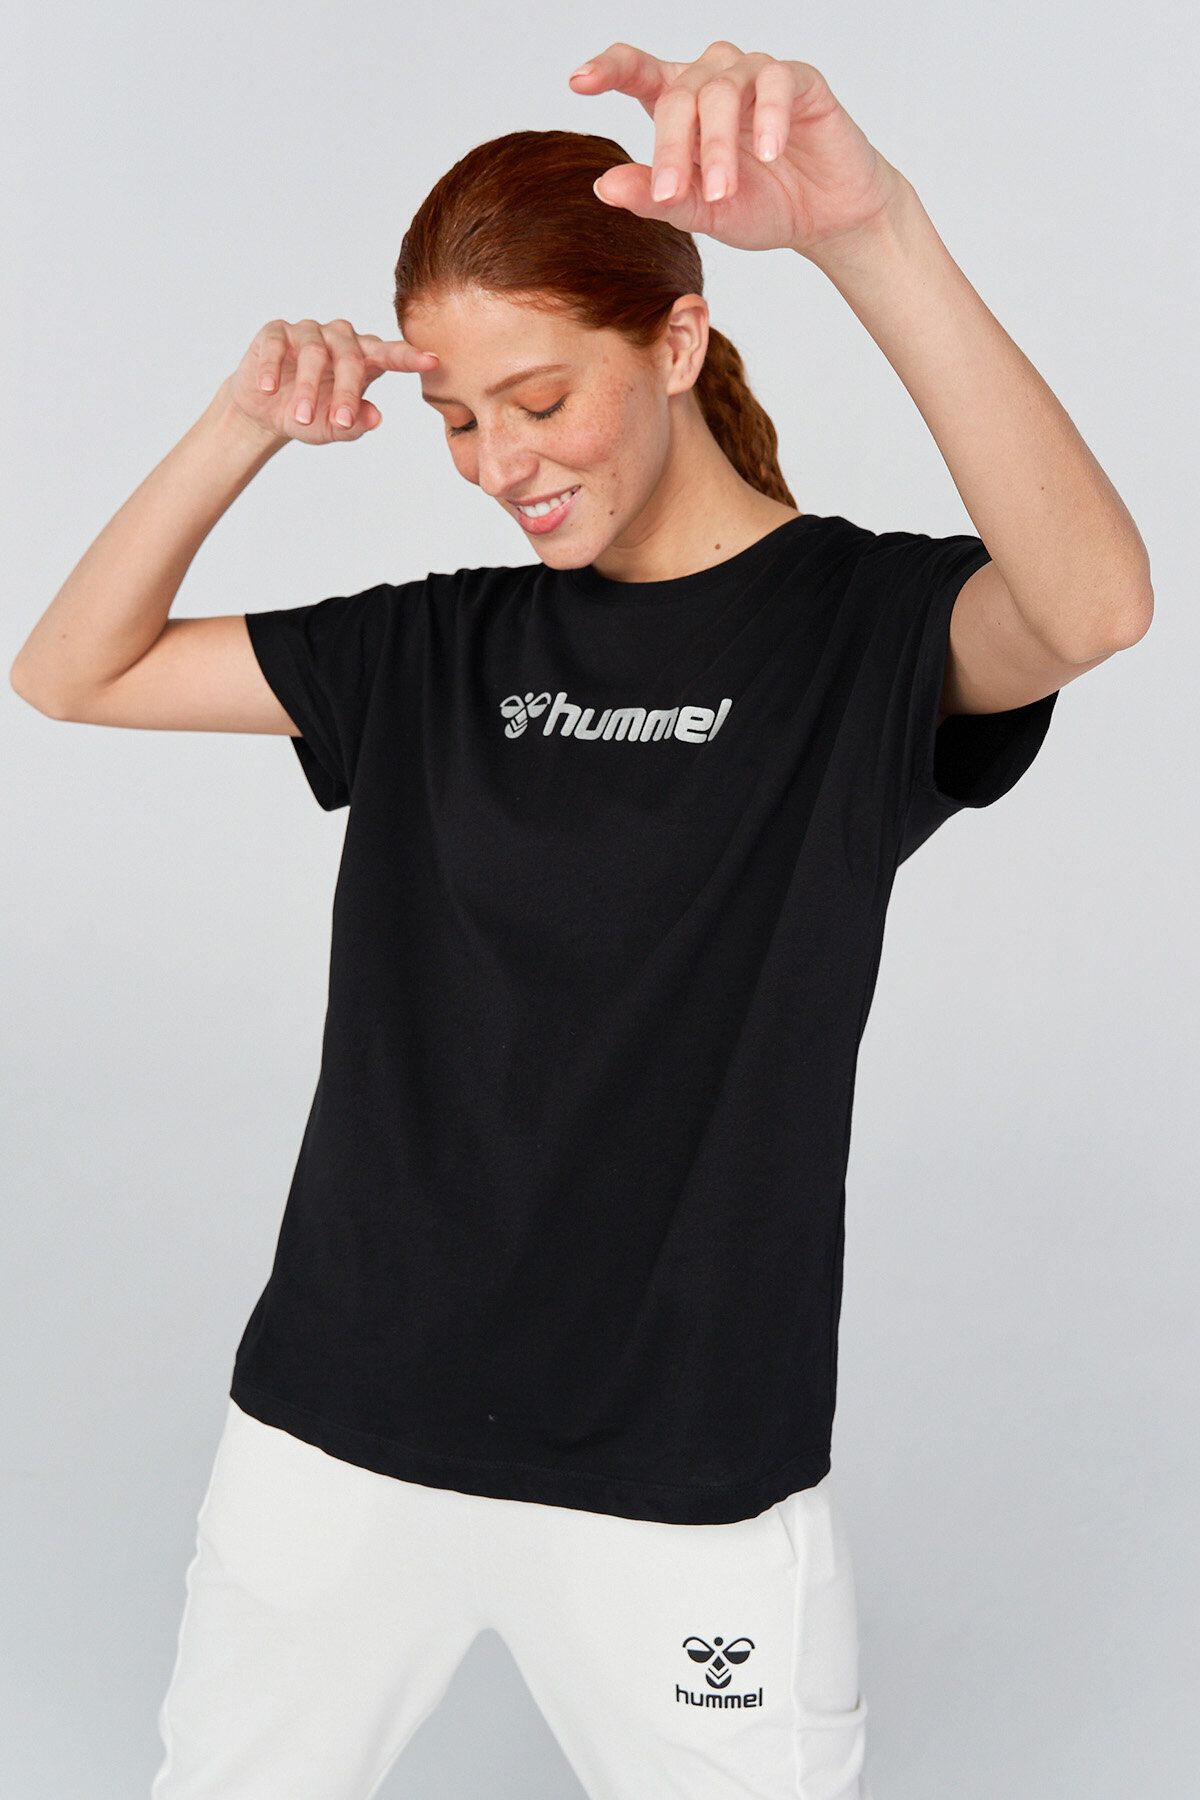 hummel Arwid T Shirt Kadın Günlük Tişört 911636-2001 Siyah